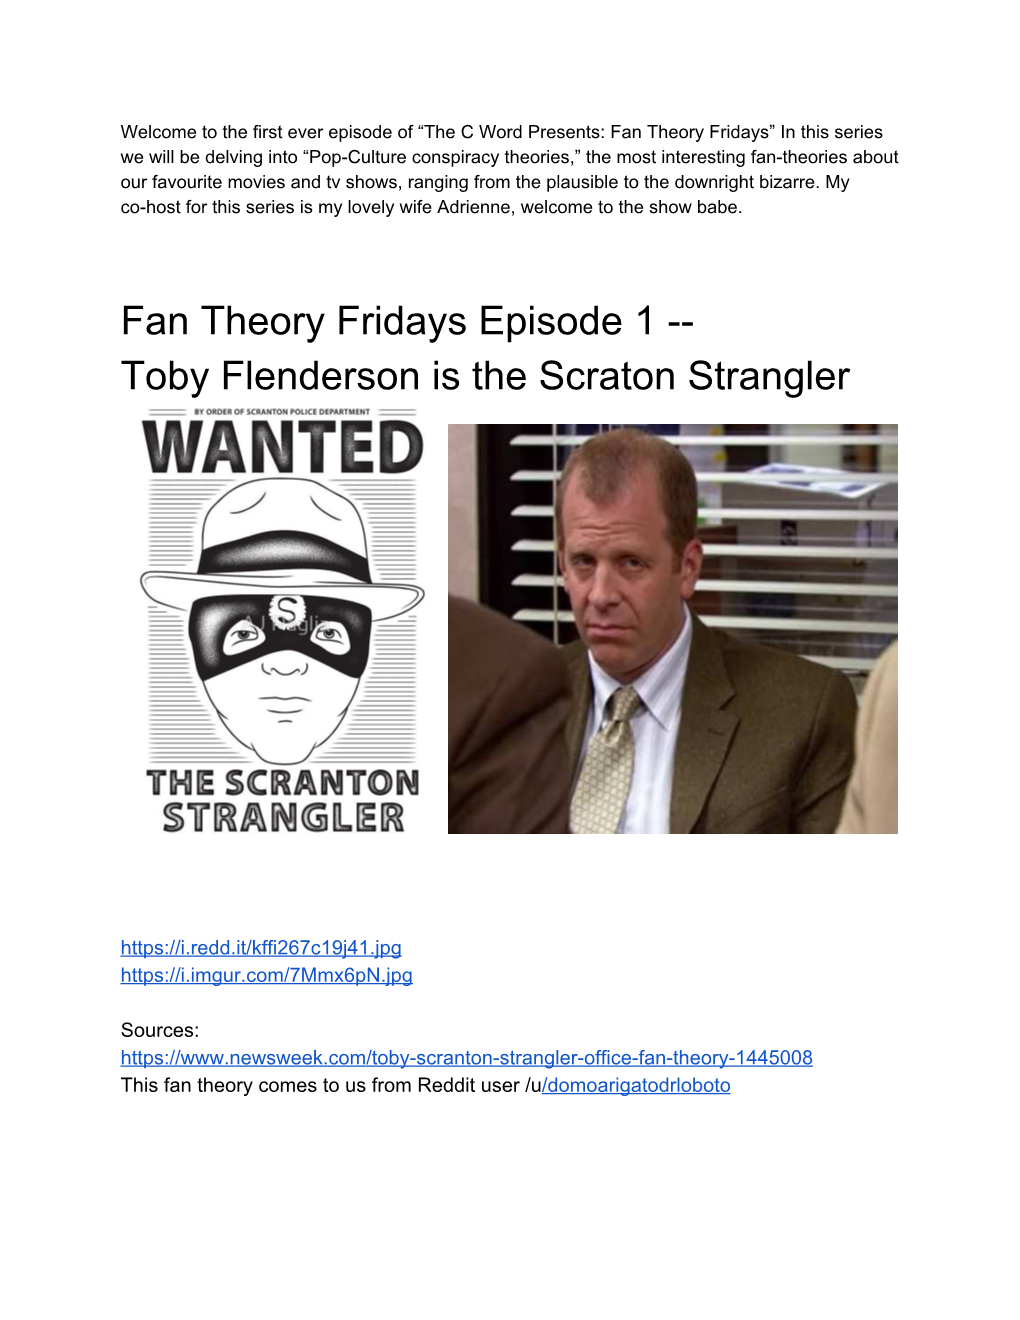 Fan Theory Fridays Episode 1 -- Toby Flenderson Is the Scraton Strangler